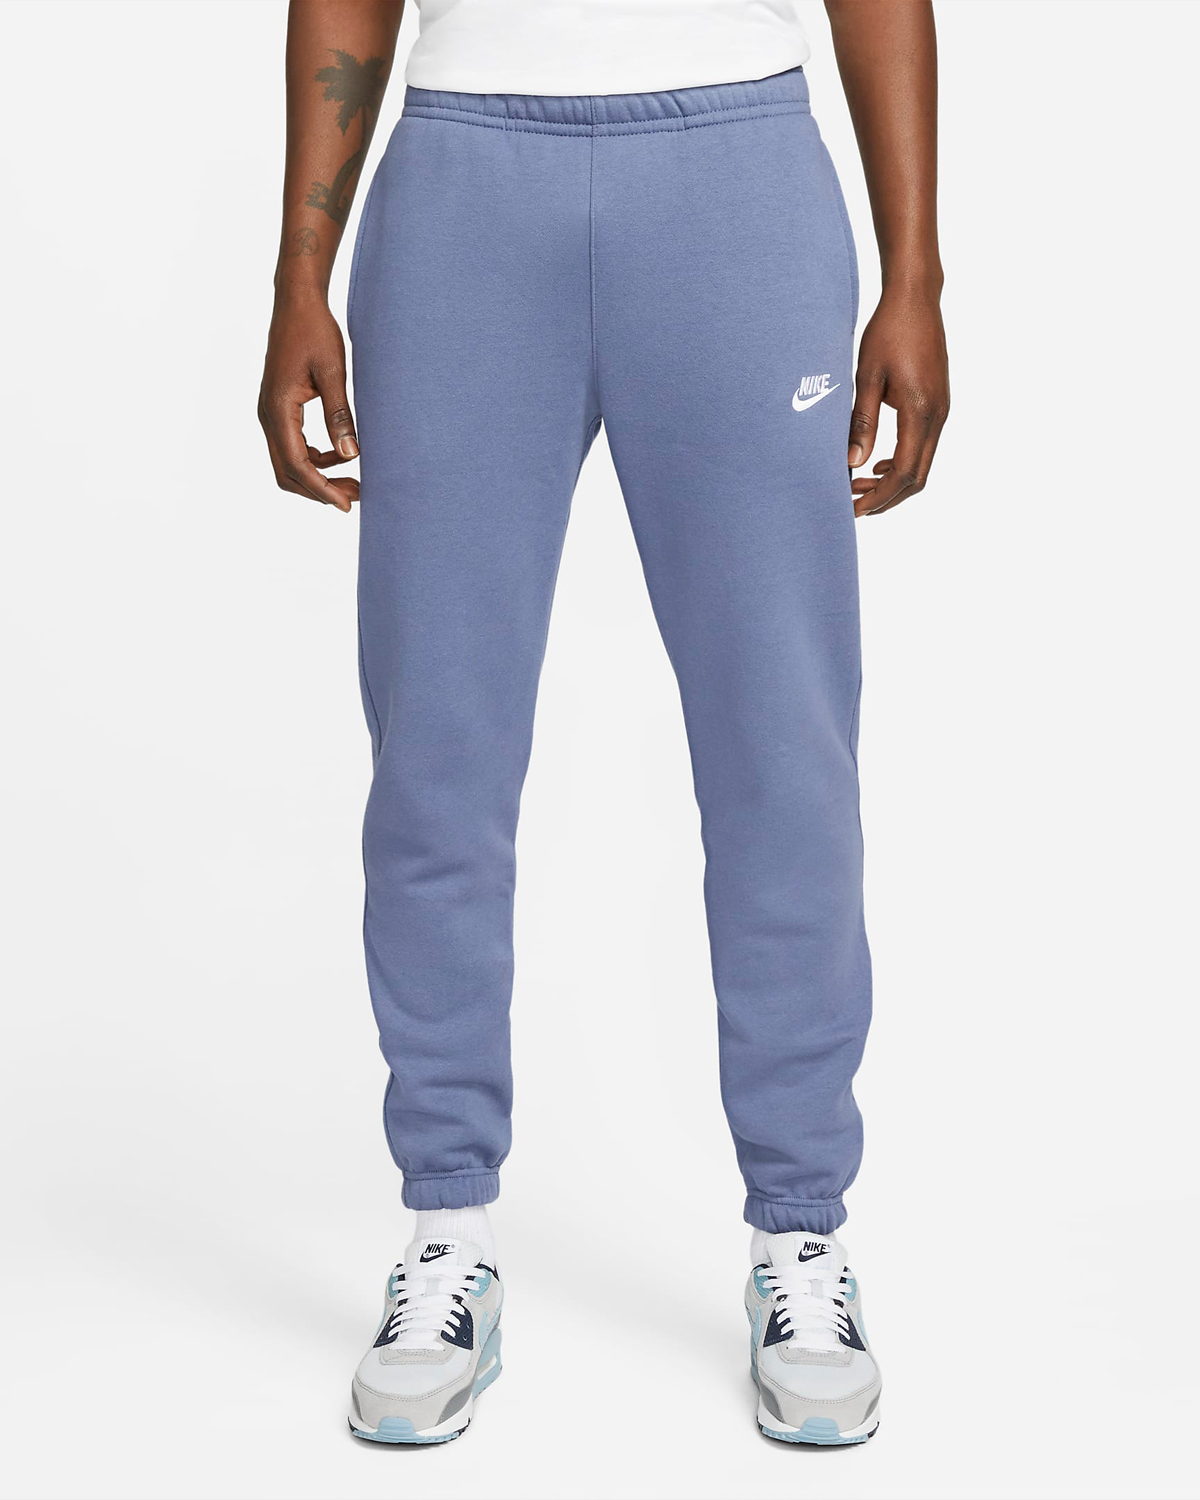 Nike-Club-Fleece-Pants-Diffused-Blue